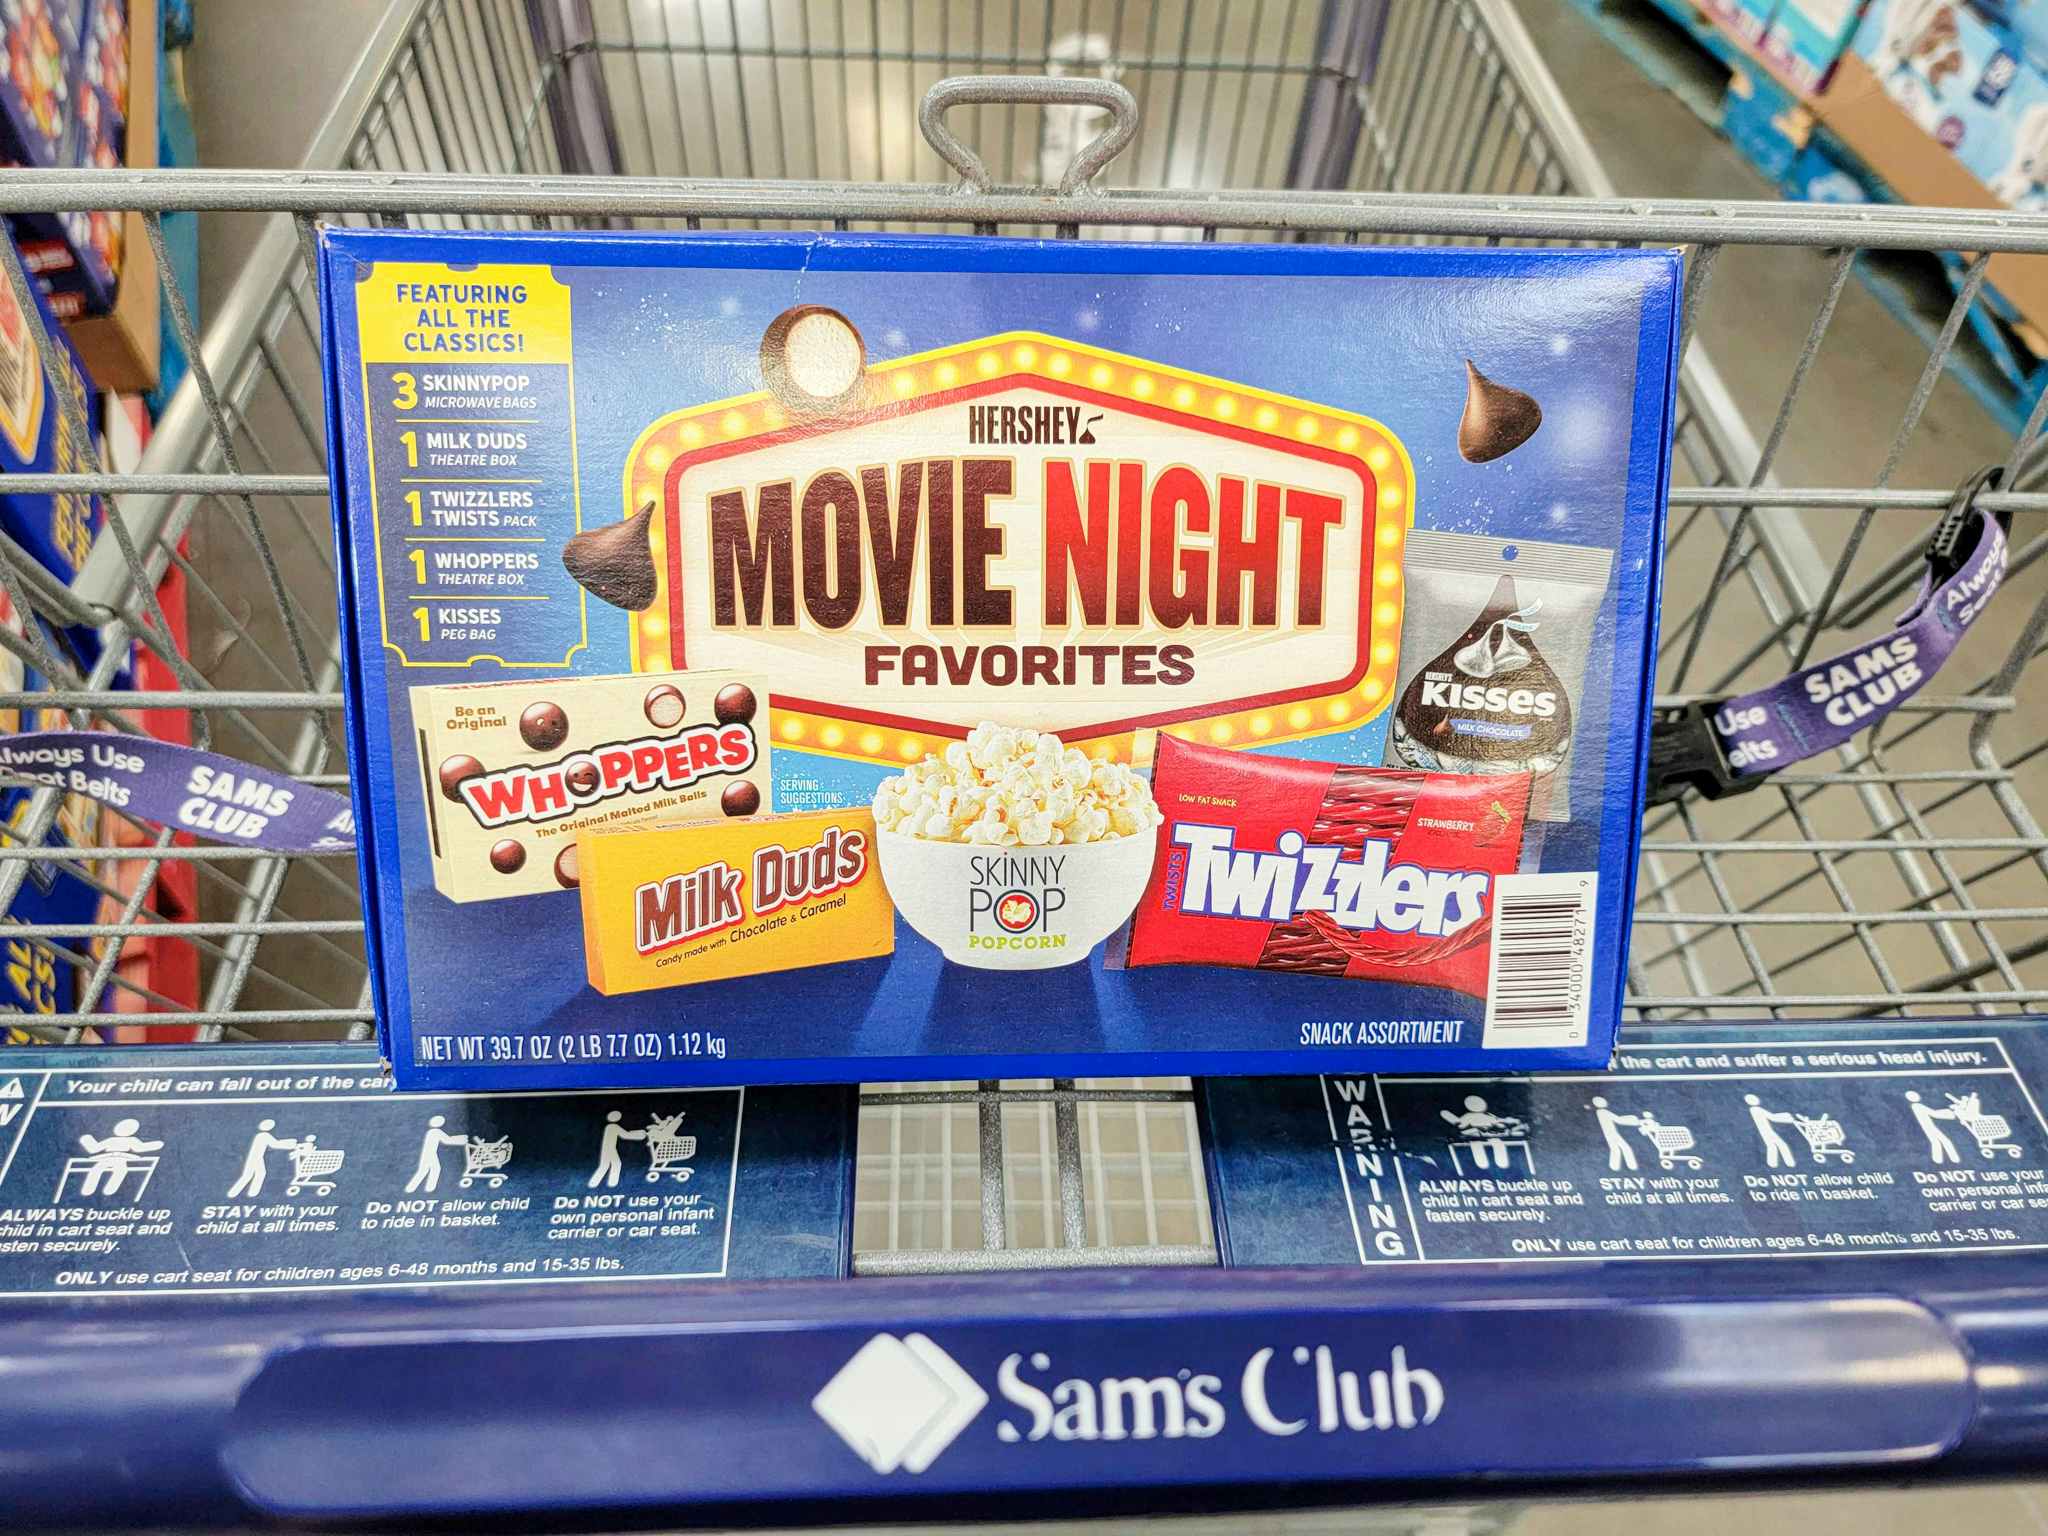 hershey's movie night favorites pack in a cart